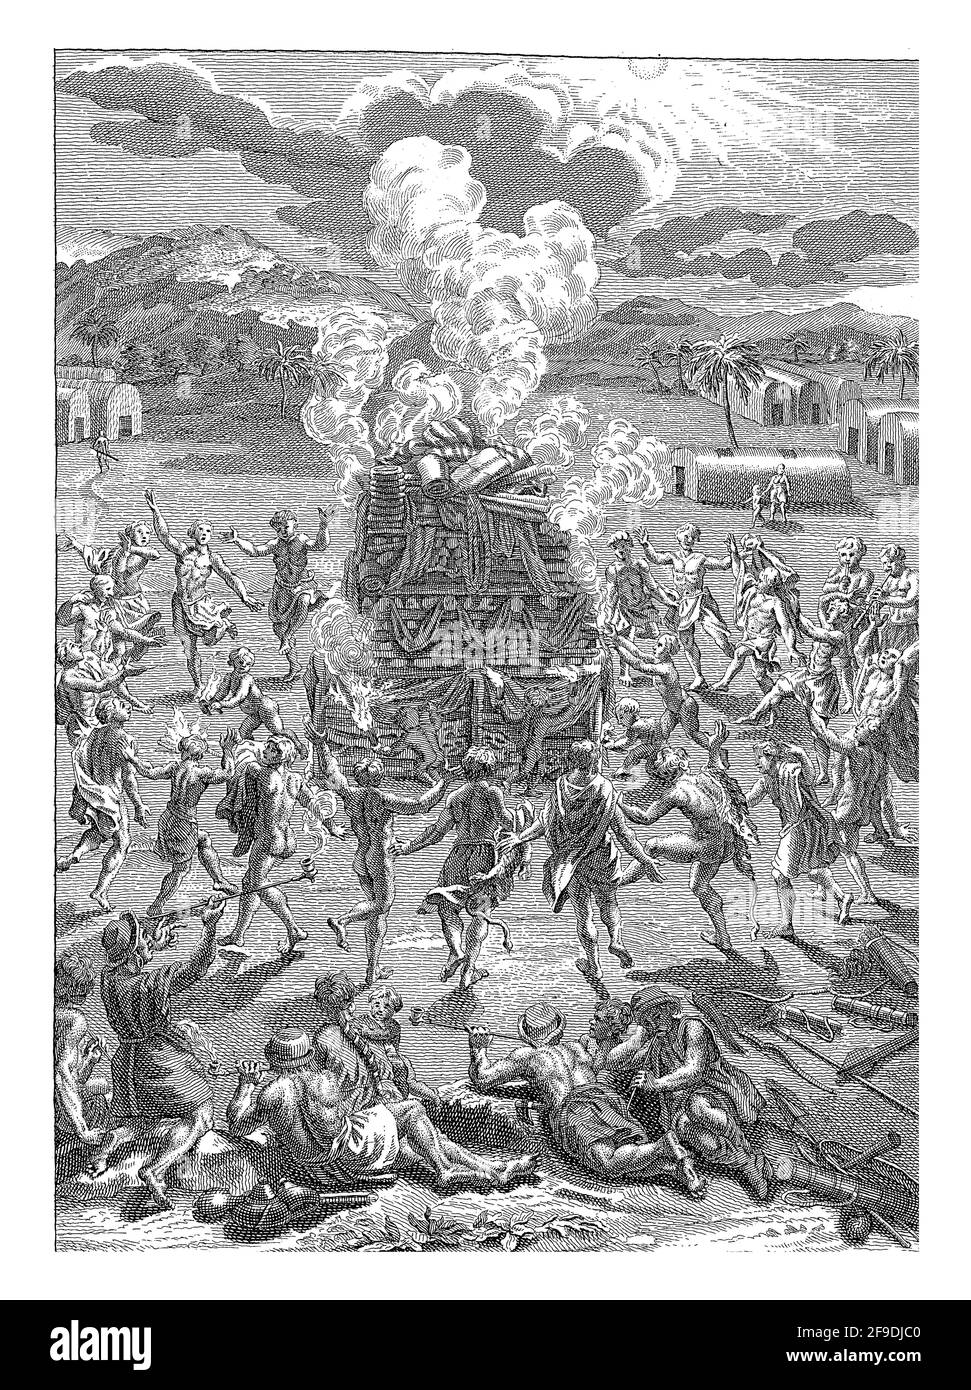 Canadians make sacrifice in honor of Quitchi Manitou, Jan Lucas van der Beek, after Bernard Picart, 1763 - 1818 Stock Photo